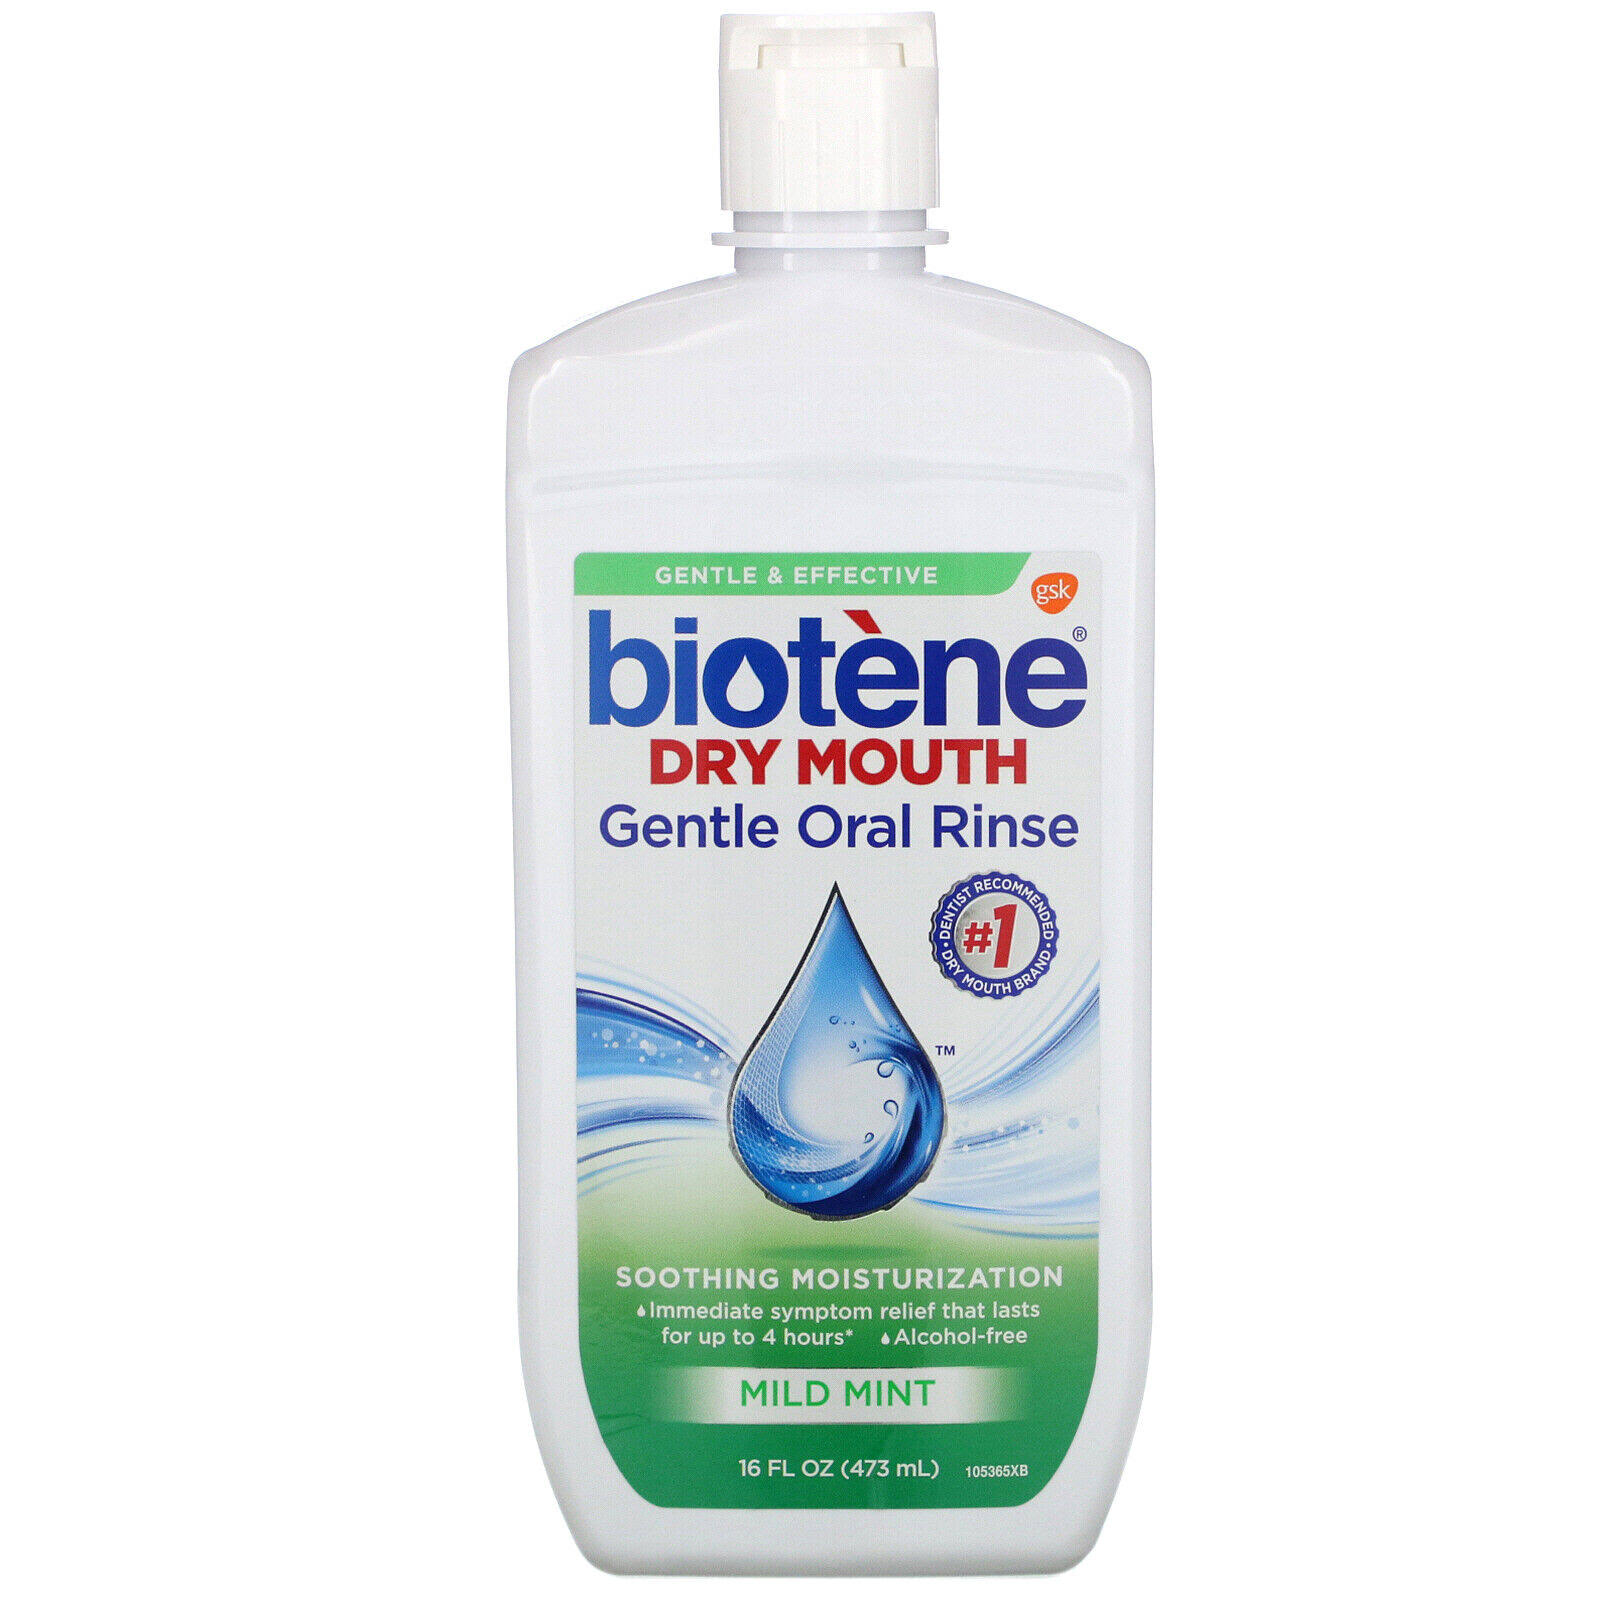 Biotene Dry Mouth Gentle Oral Rinse Mild Mint - 16 fl oz